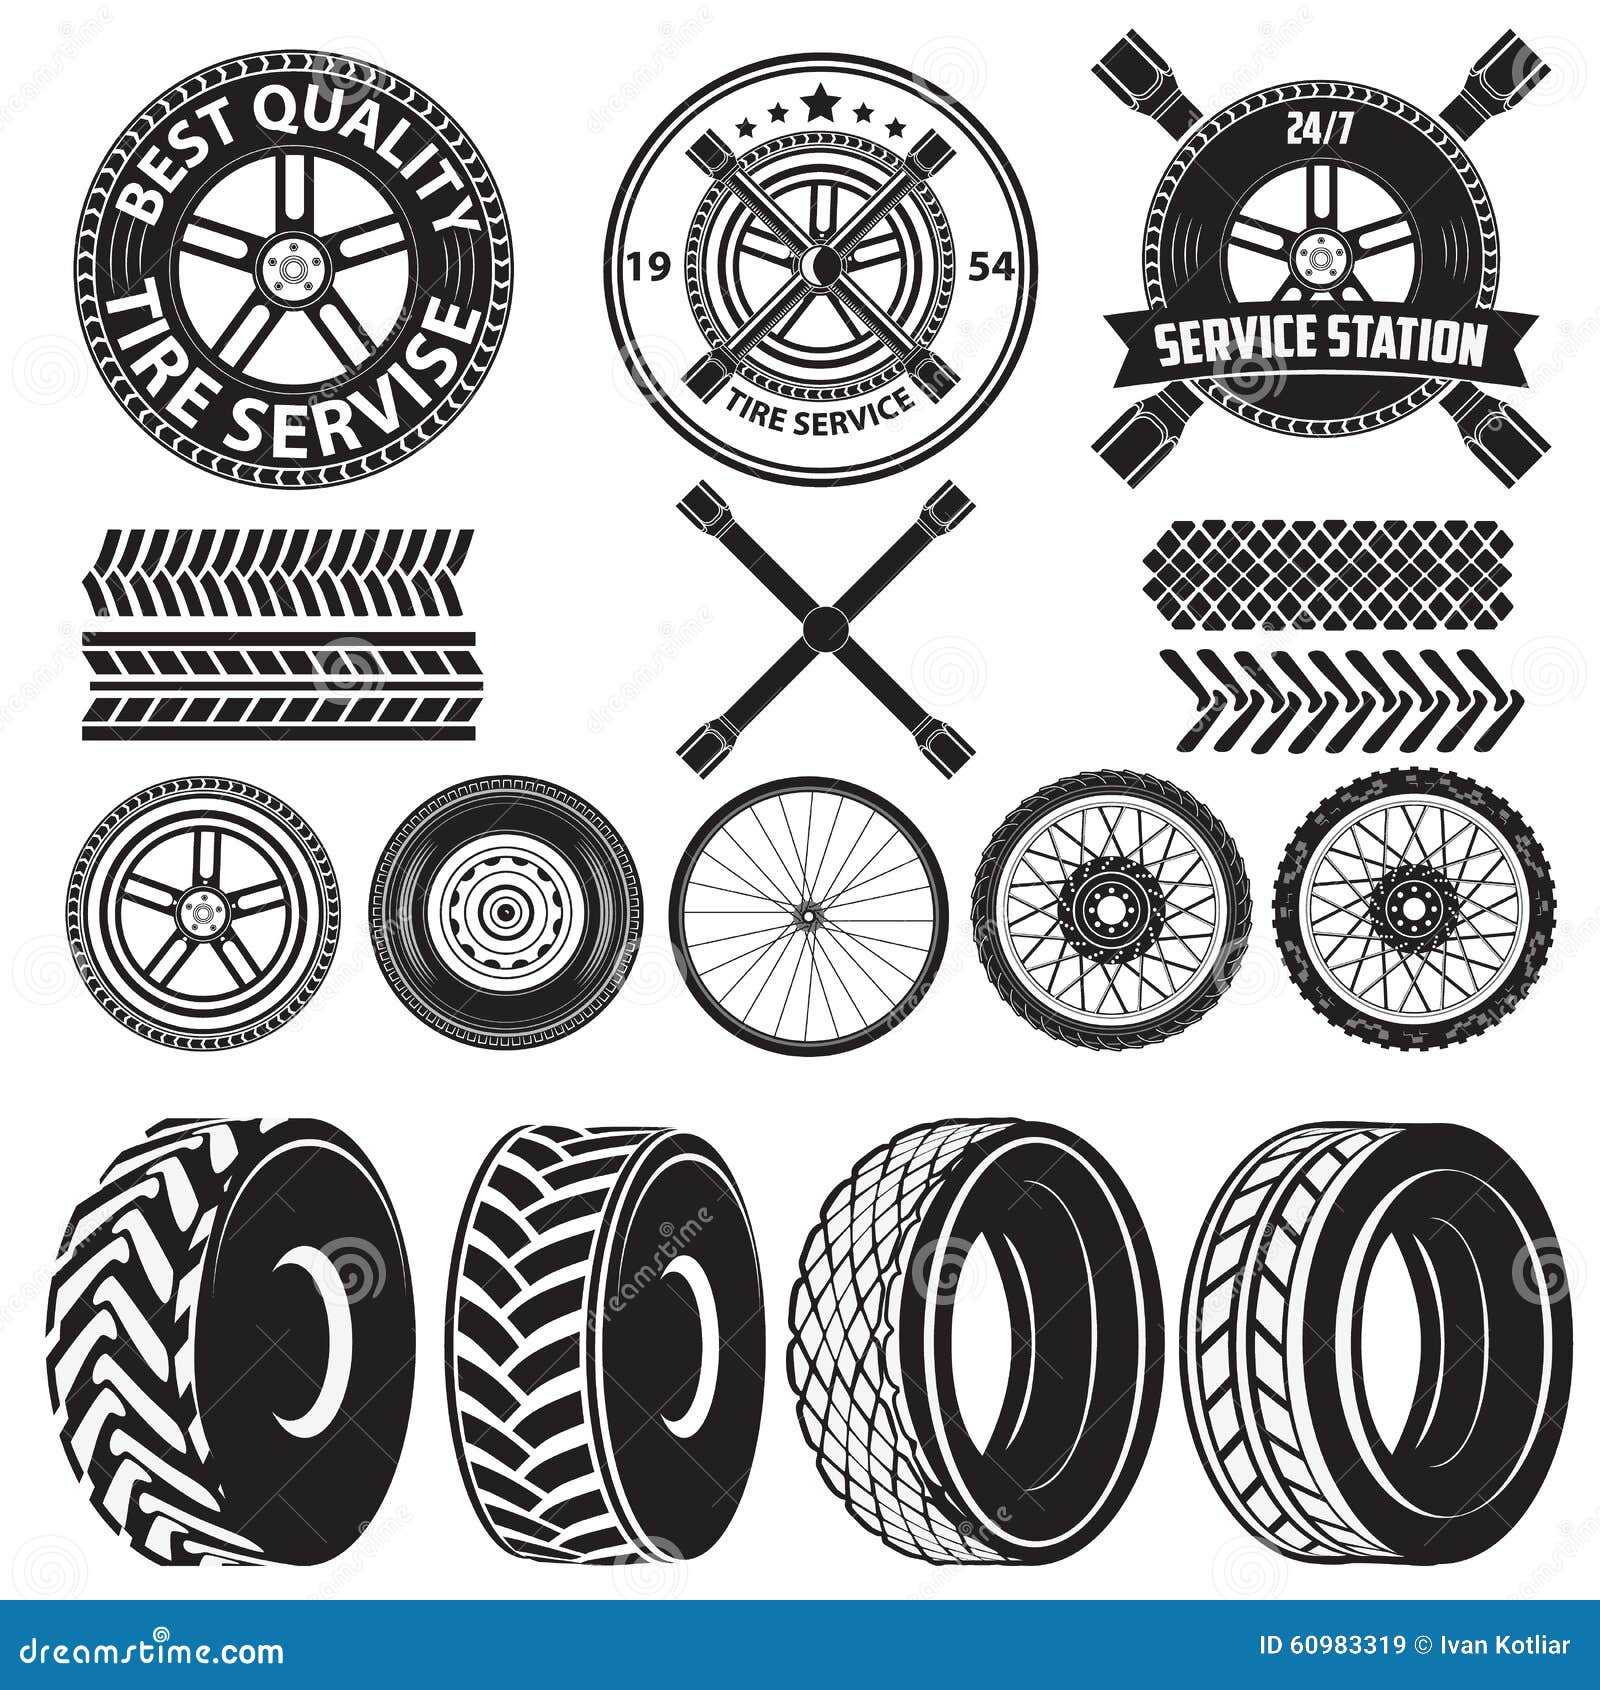 Tire service label stock vector. Illustration of classic - 60983319